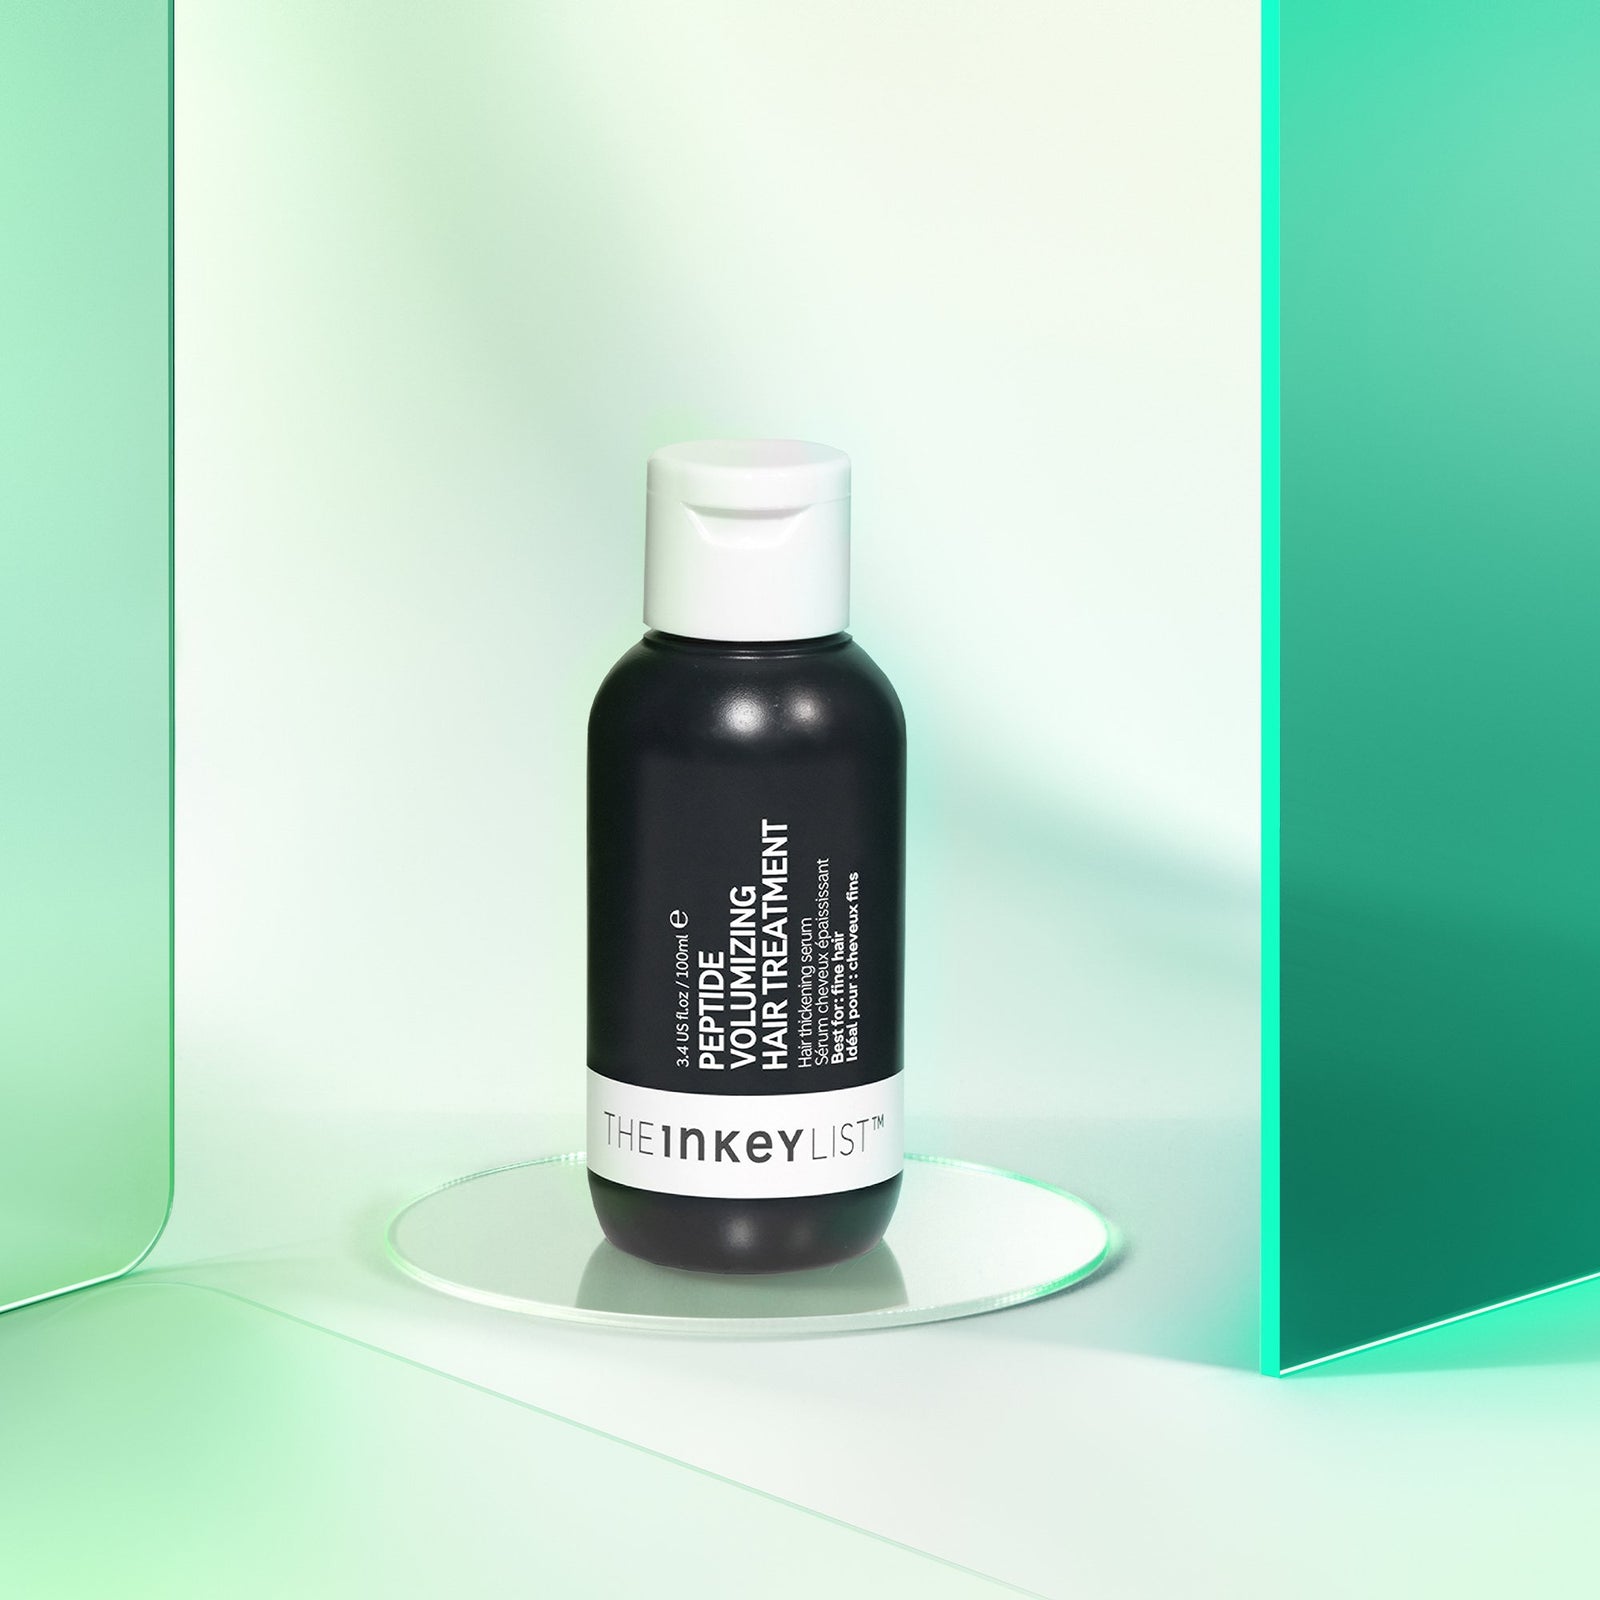 Peptide Volumizing Hair Treatment product against green background